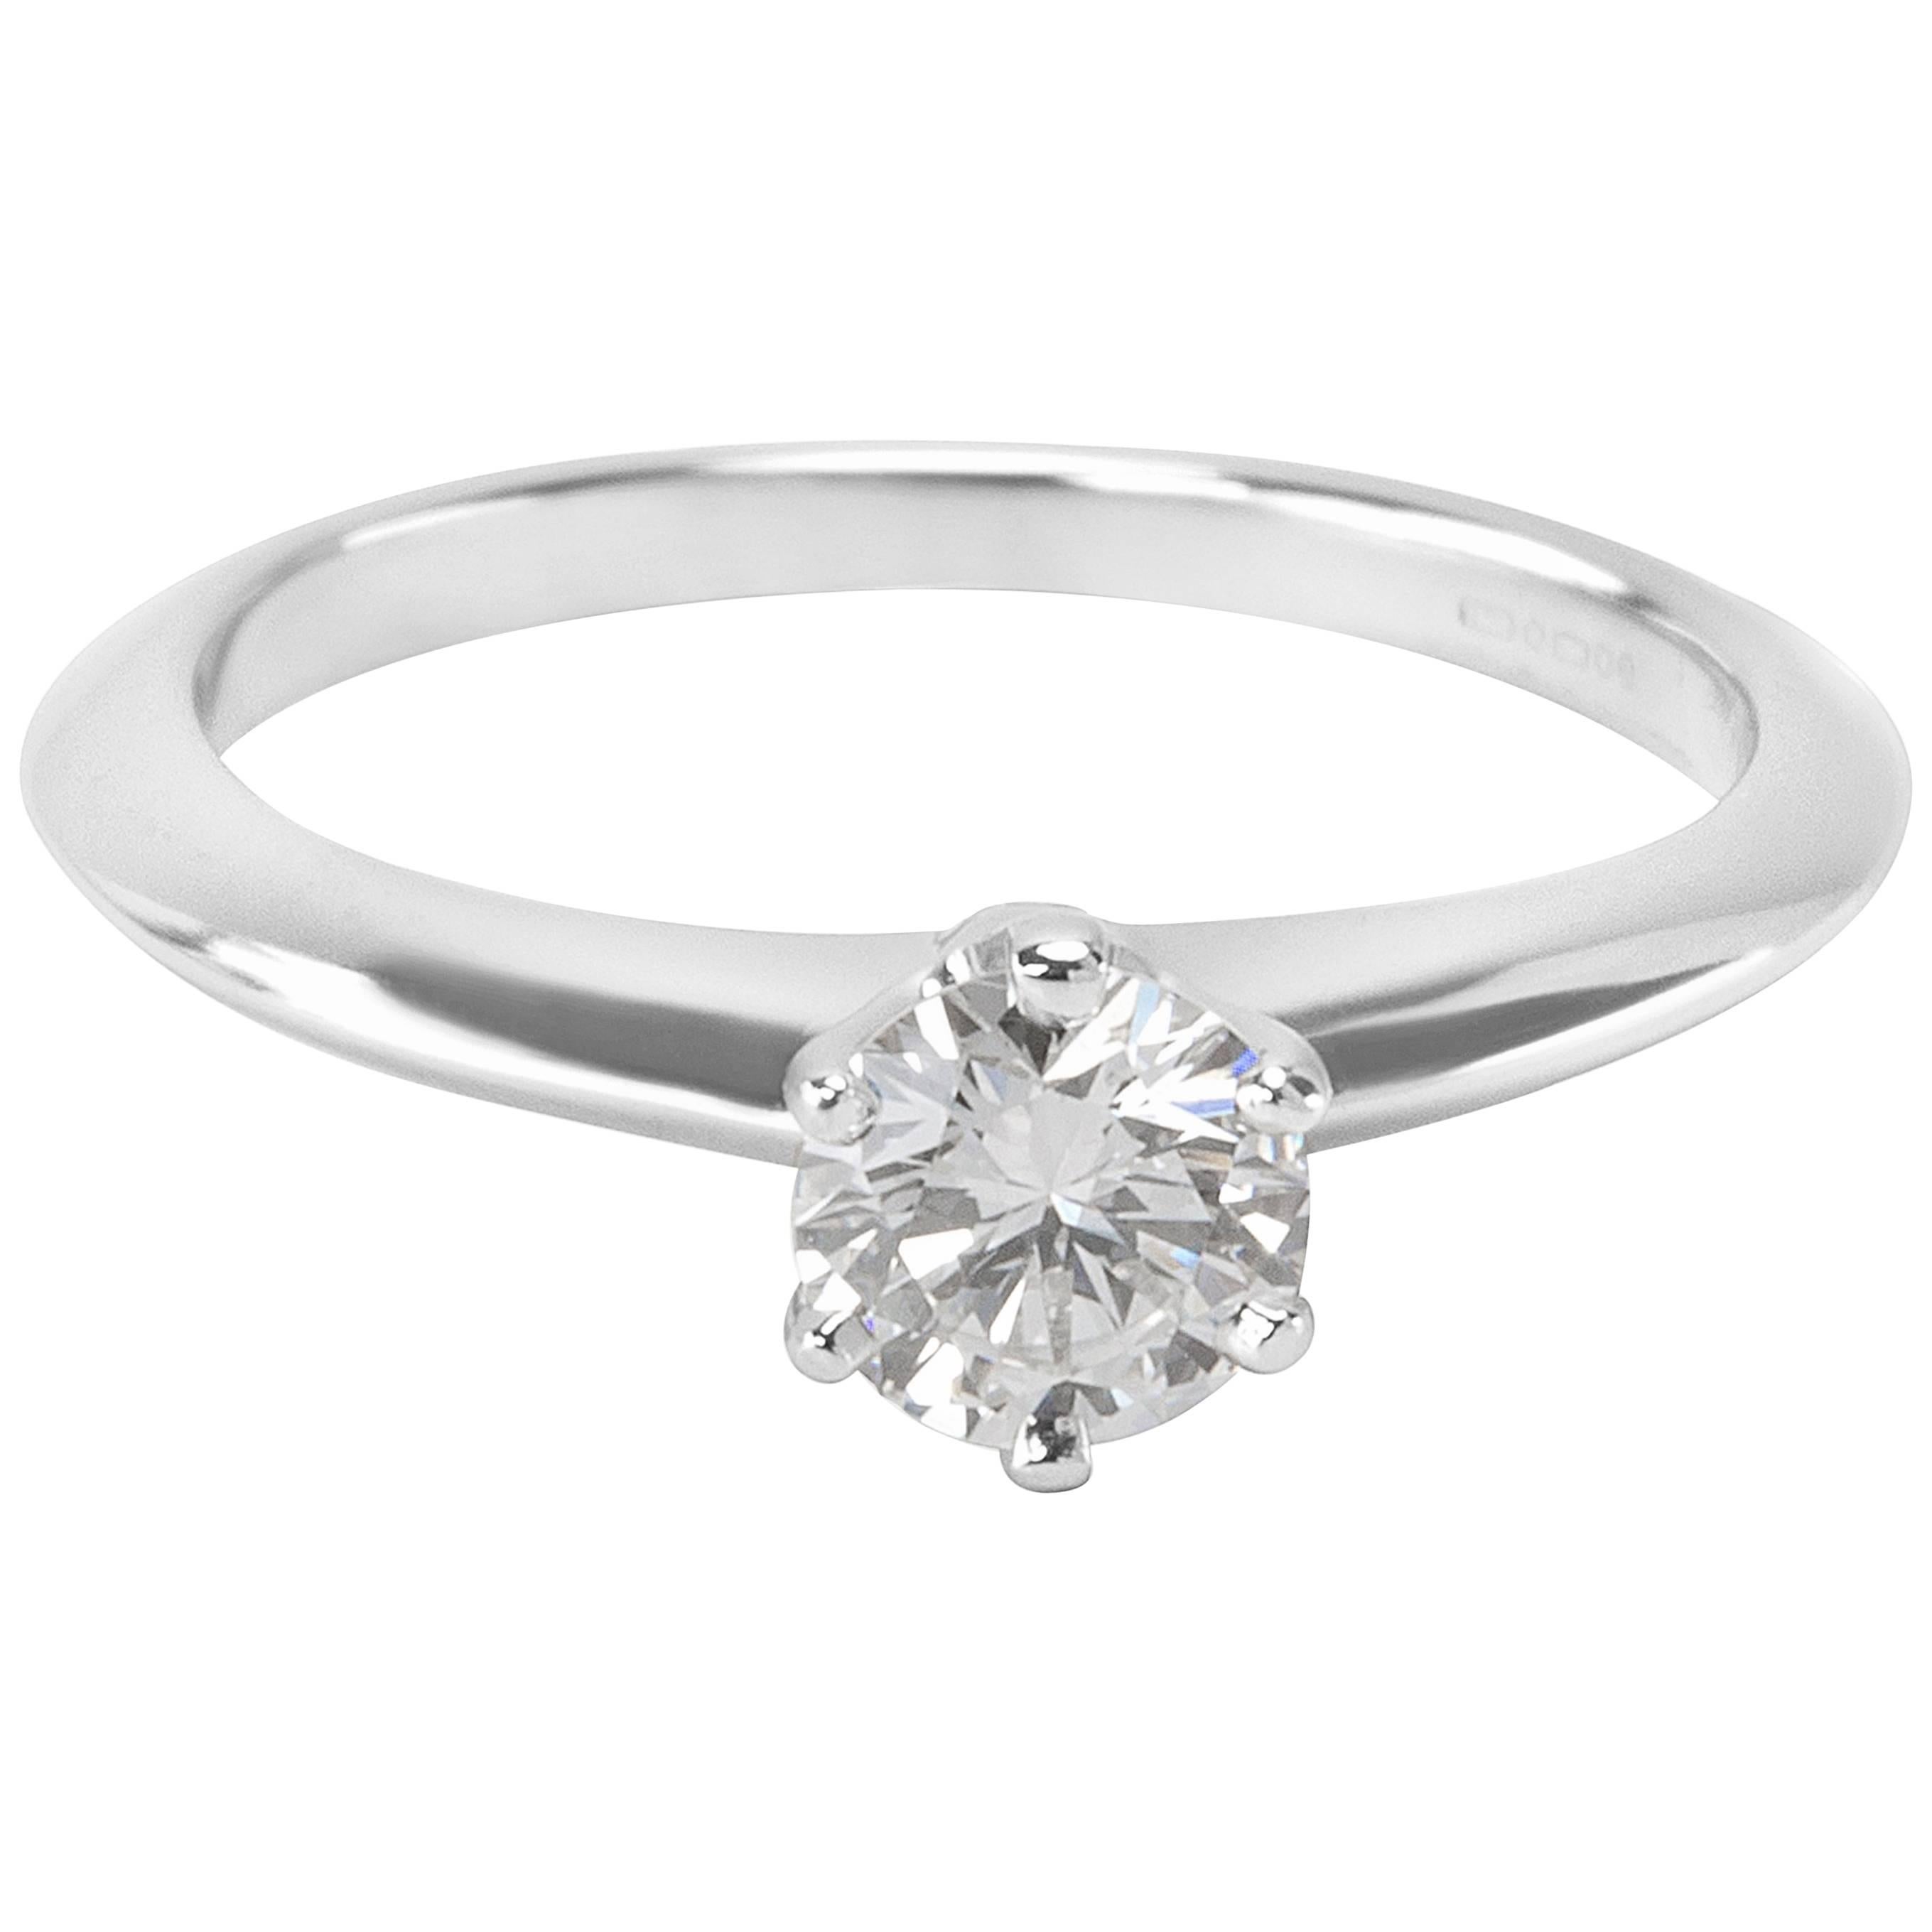 Tiffany & Co. Diamond Solitaire Engagement Ring in Platinum 0.42 Carat